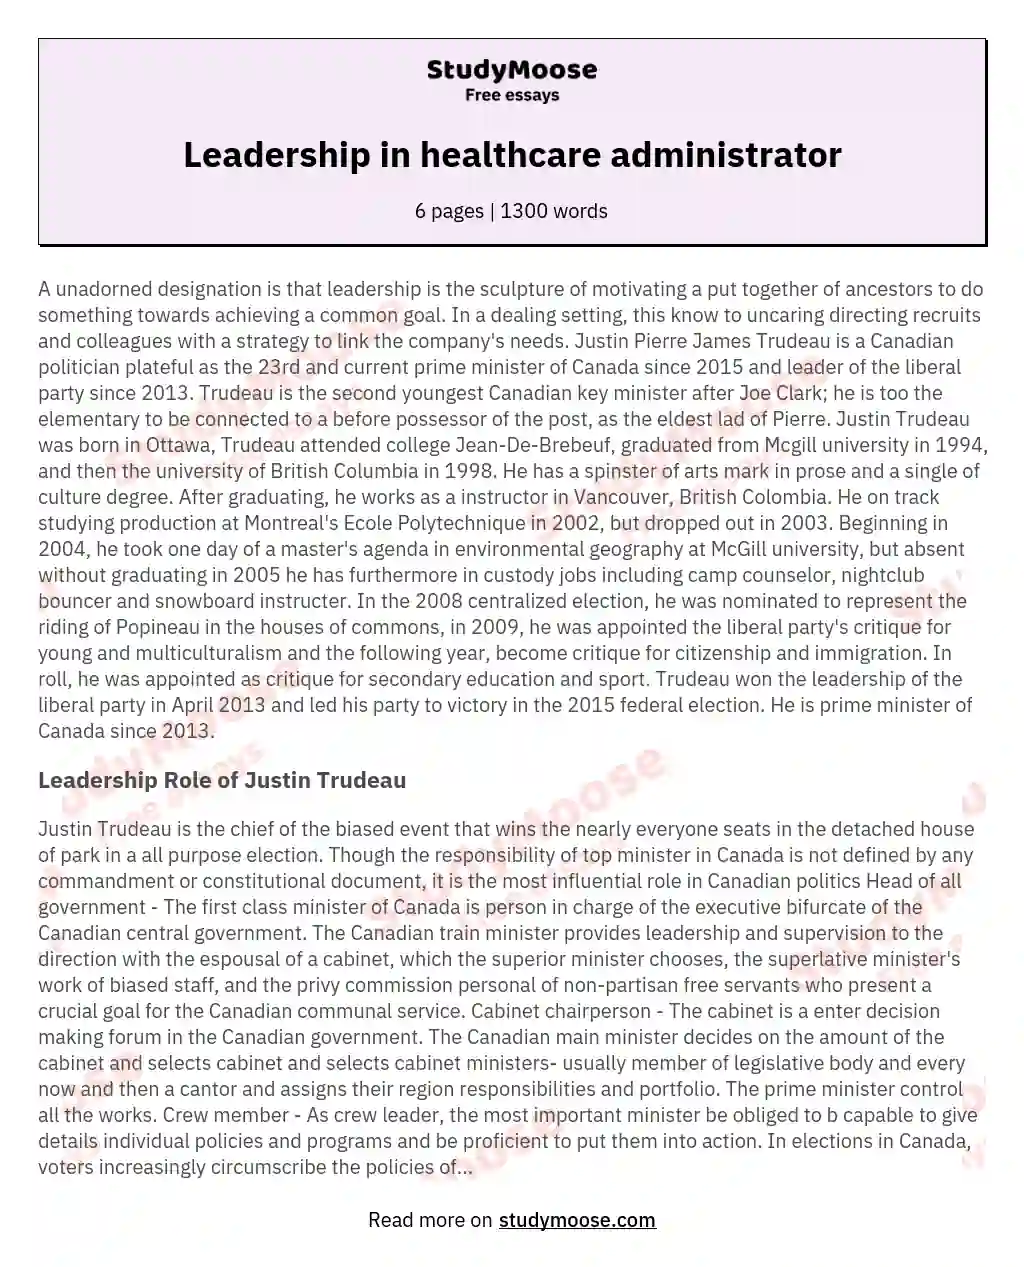 Leadership in healthcare administrator essay